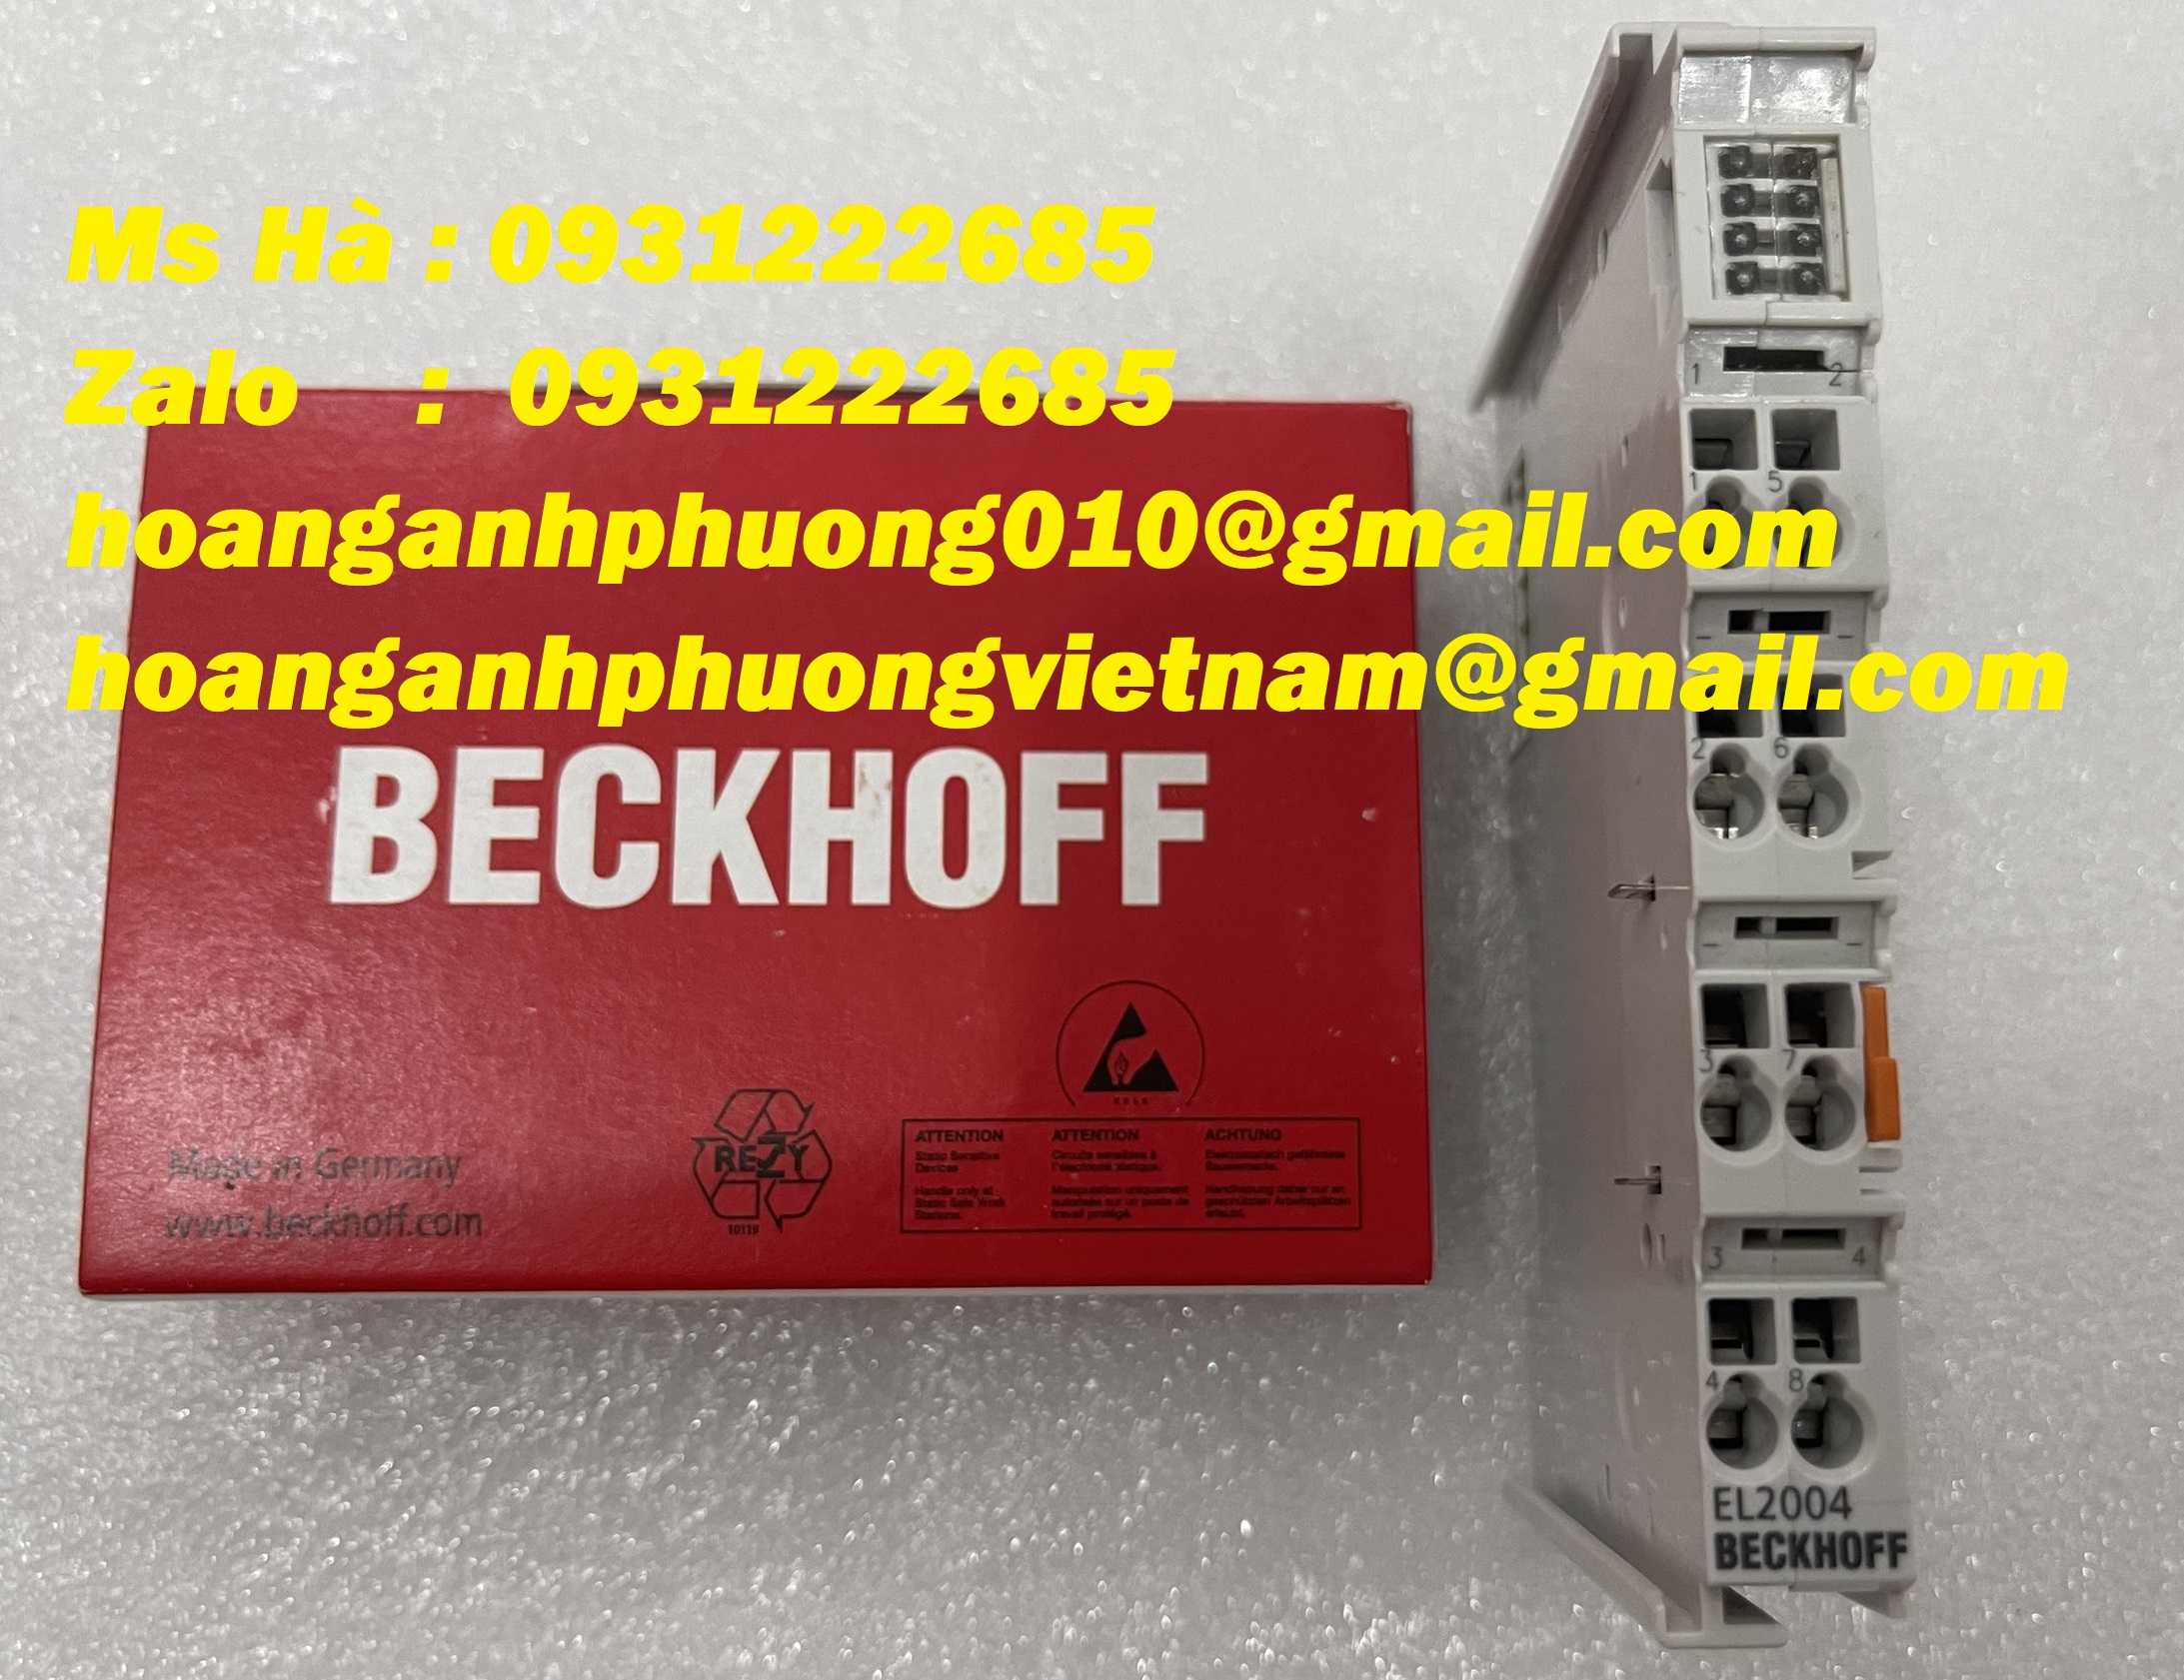 4-channel digital output EL2004 beckhoff - Bình Dương